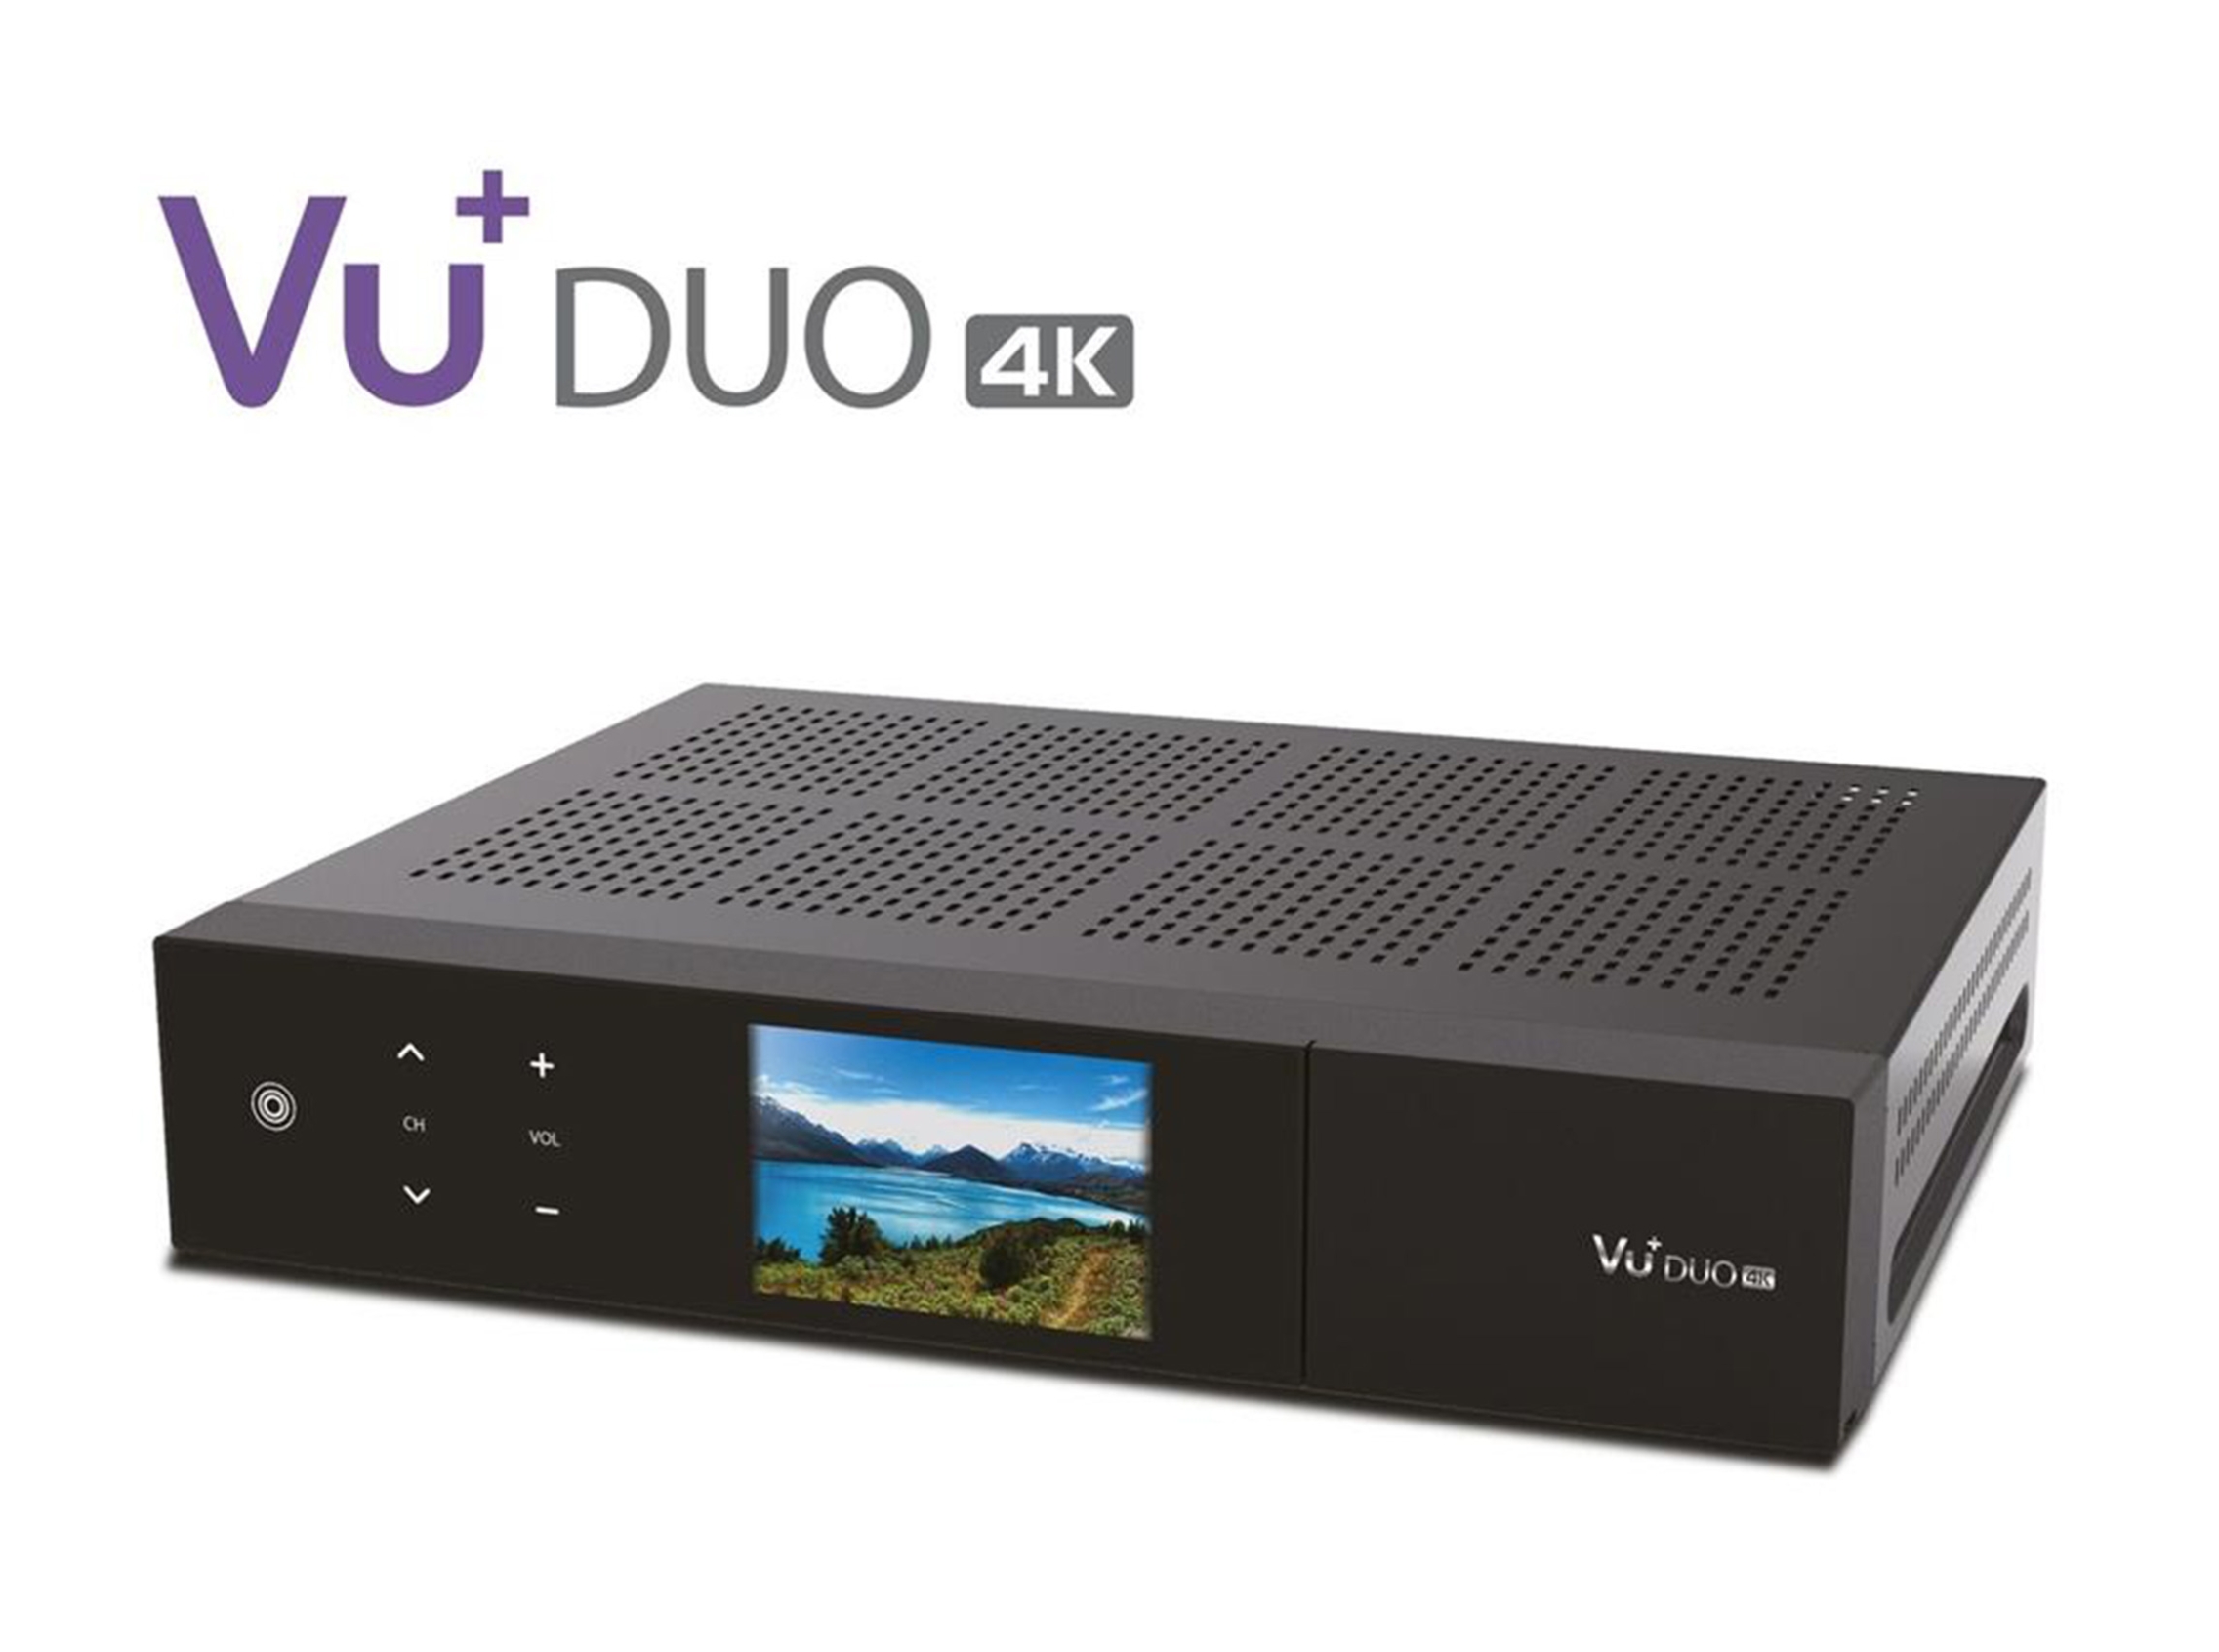 VU+ Duo 4K SE 2x DVB-T2 Dual PVR ready Linux Receiver